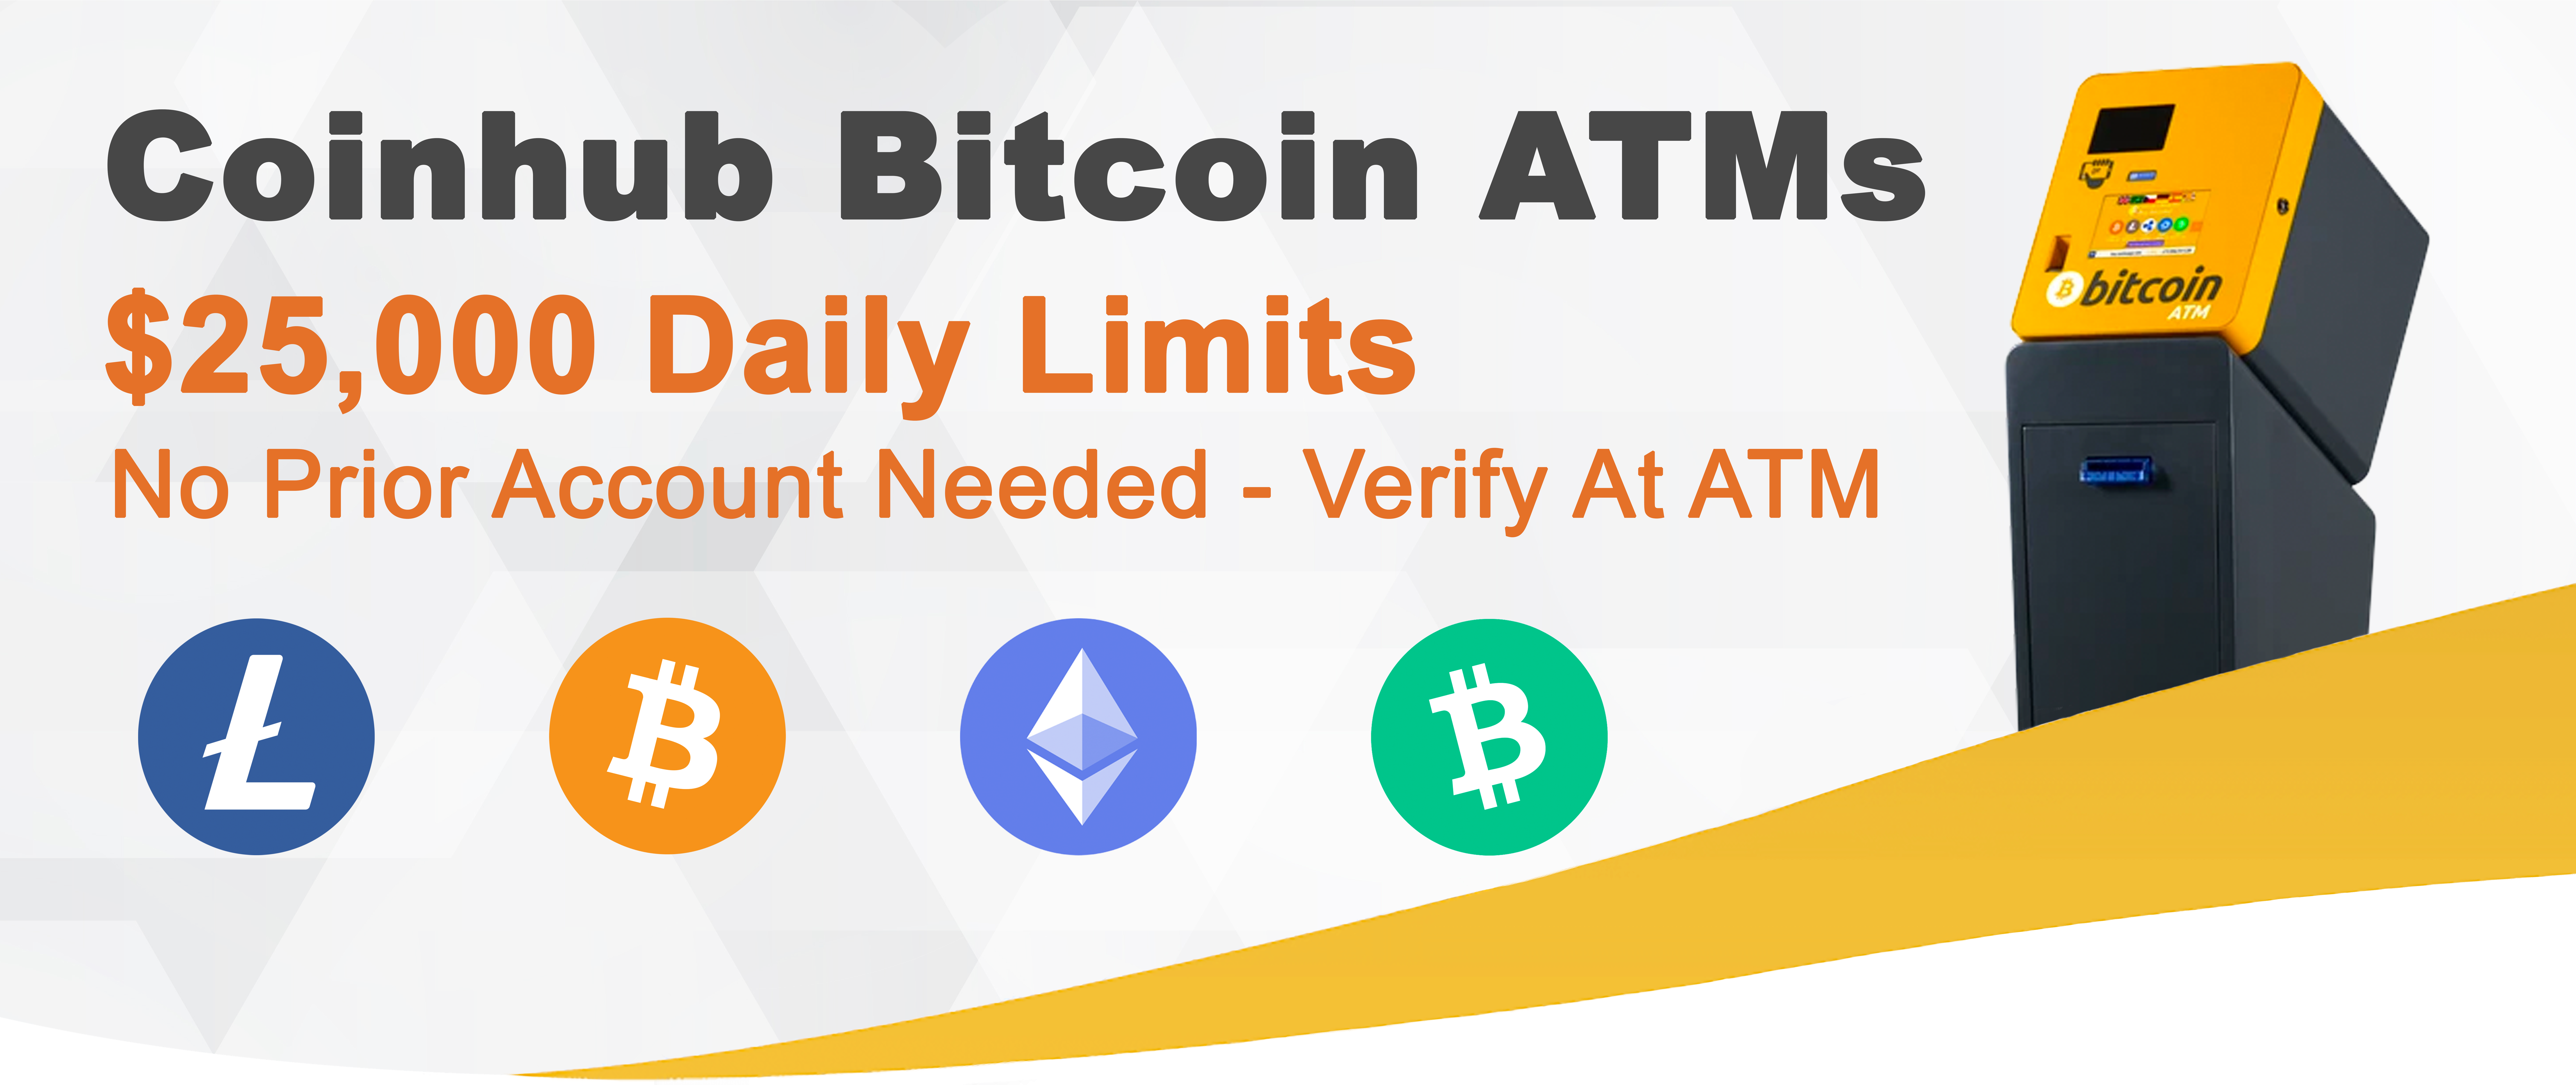 Coinhub Bitcoin ATM $25,000 Daily Limits